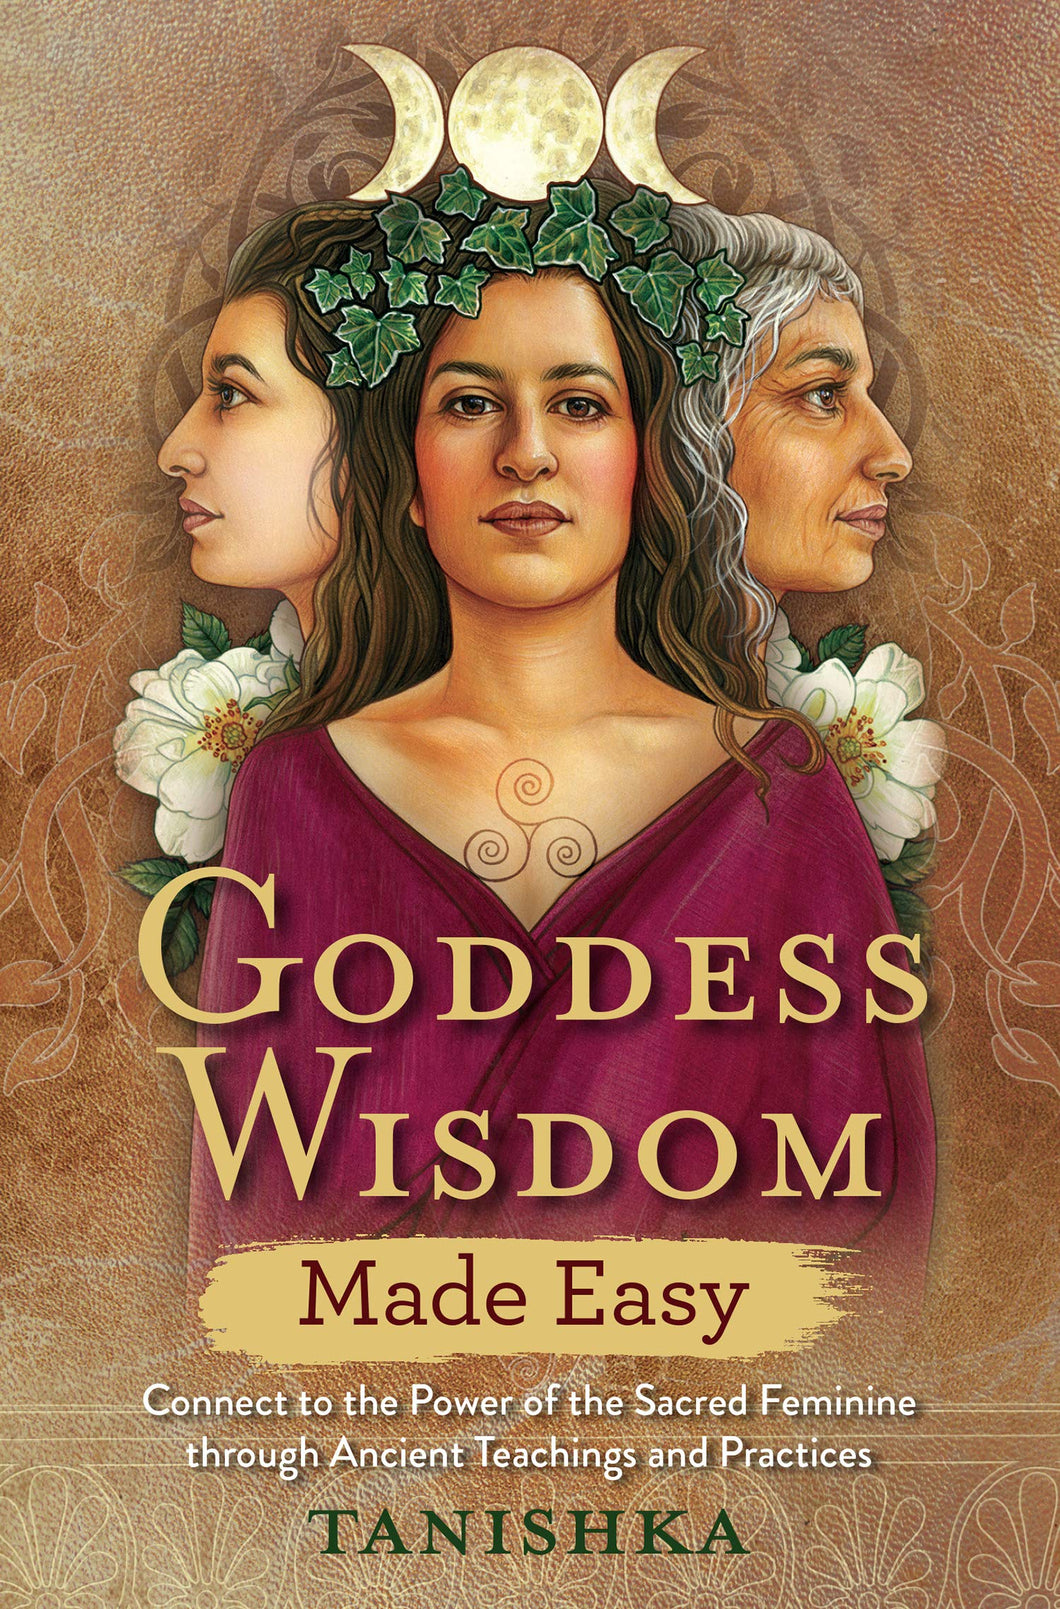 Goddess Wisdom by Tanishka